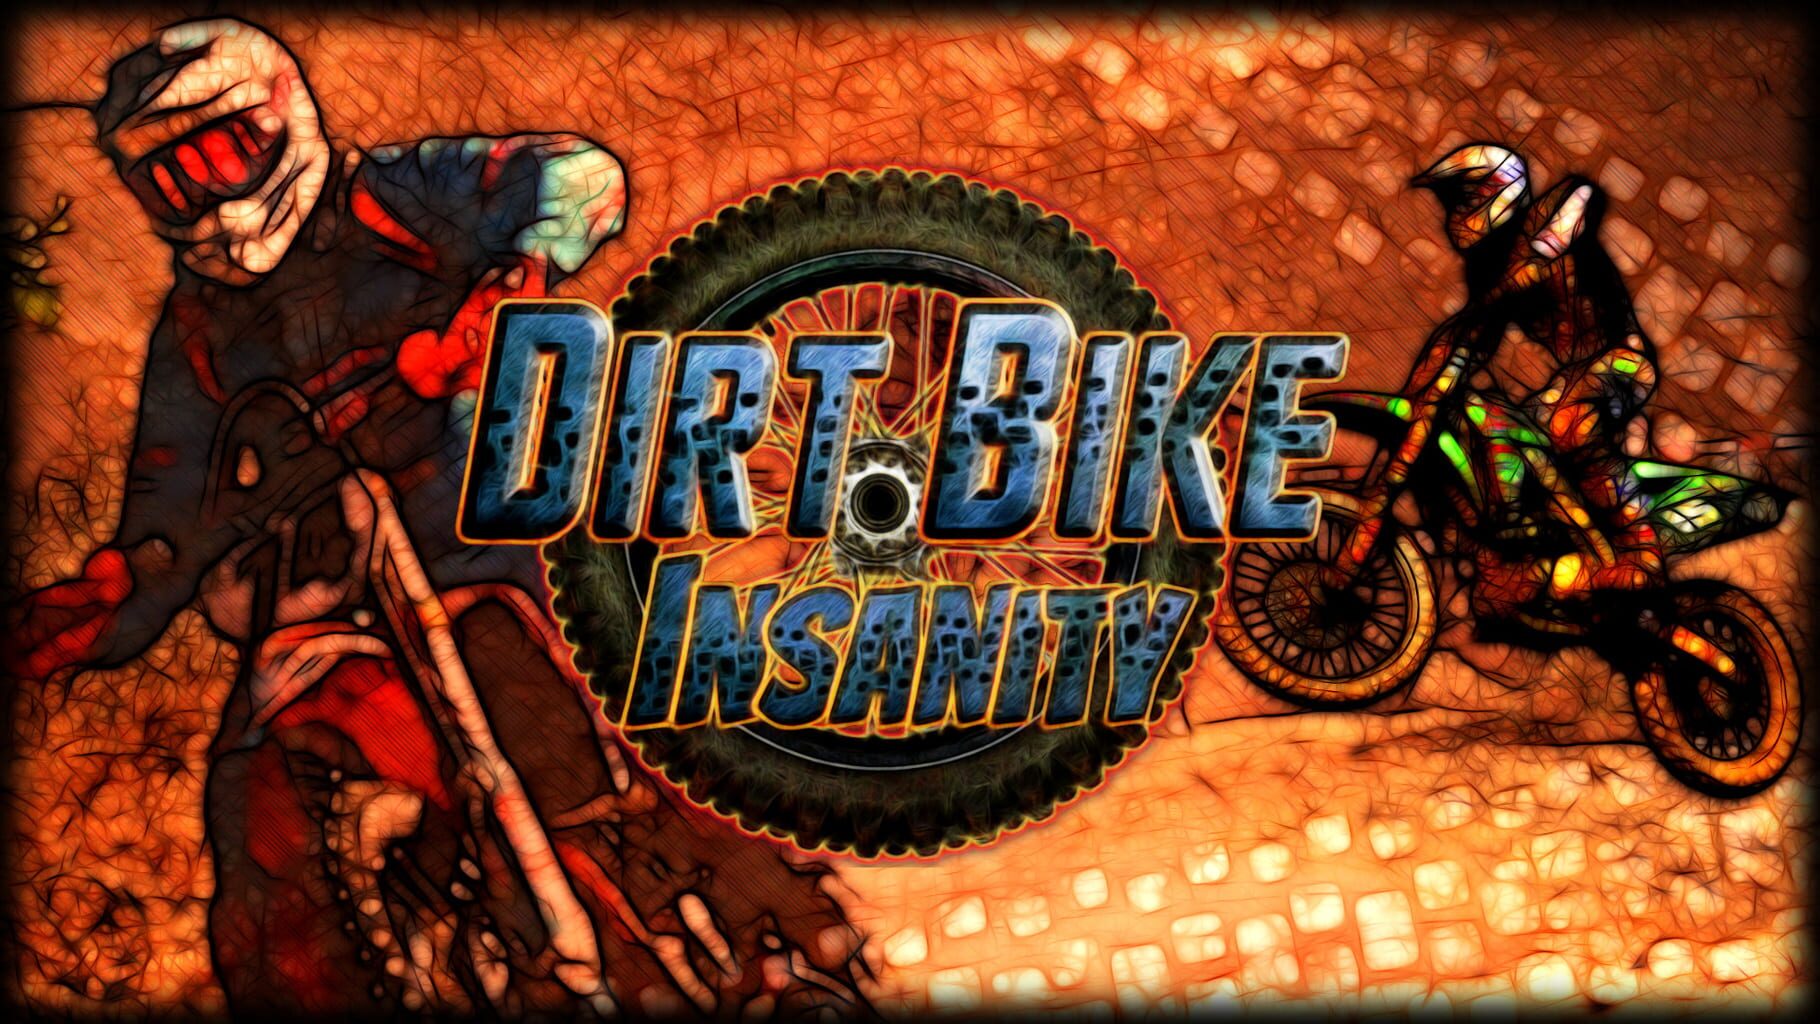 Dirt Bike Insanity artwork